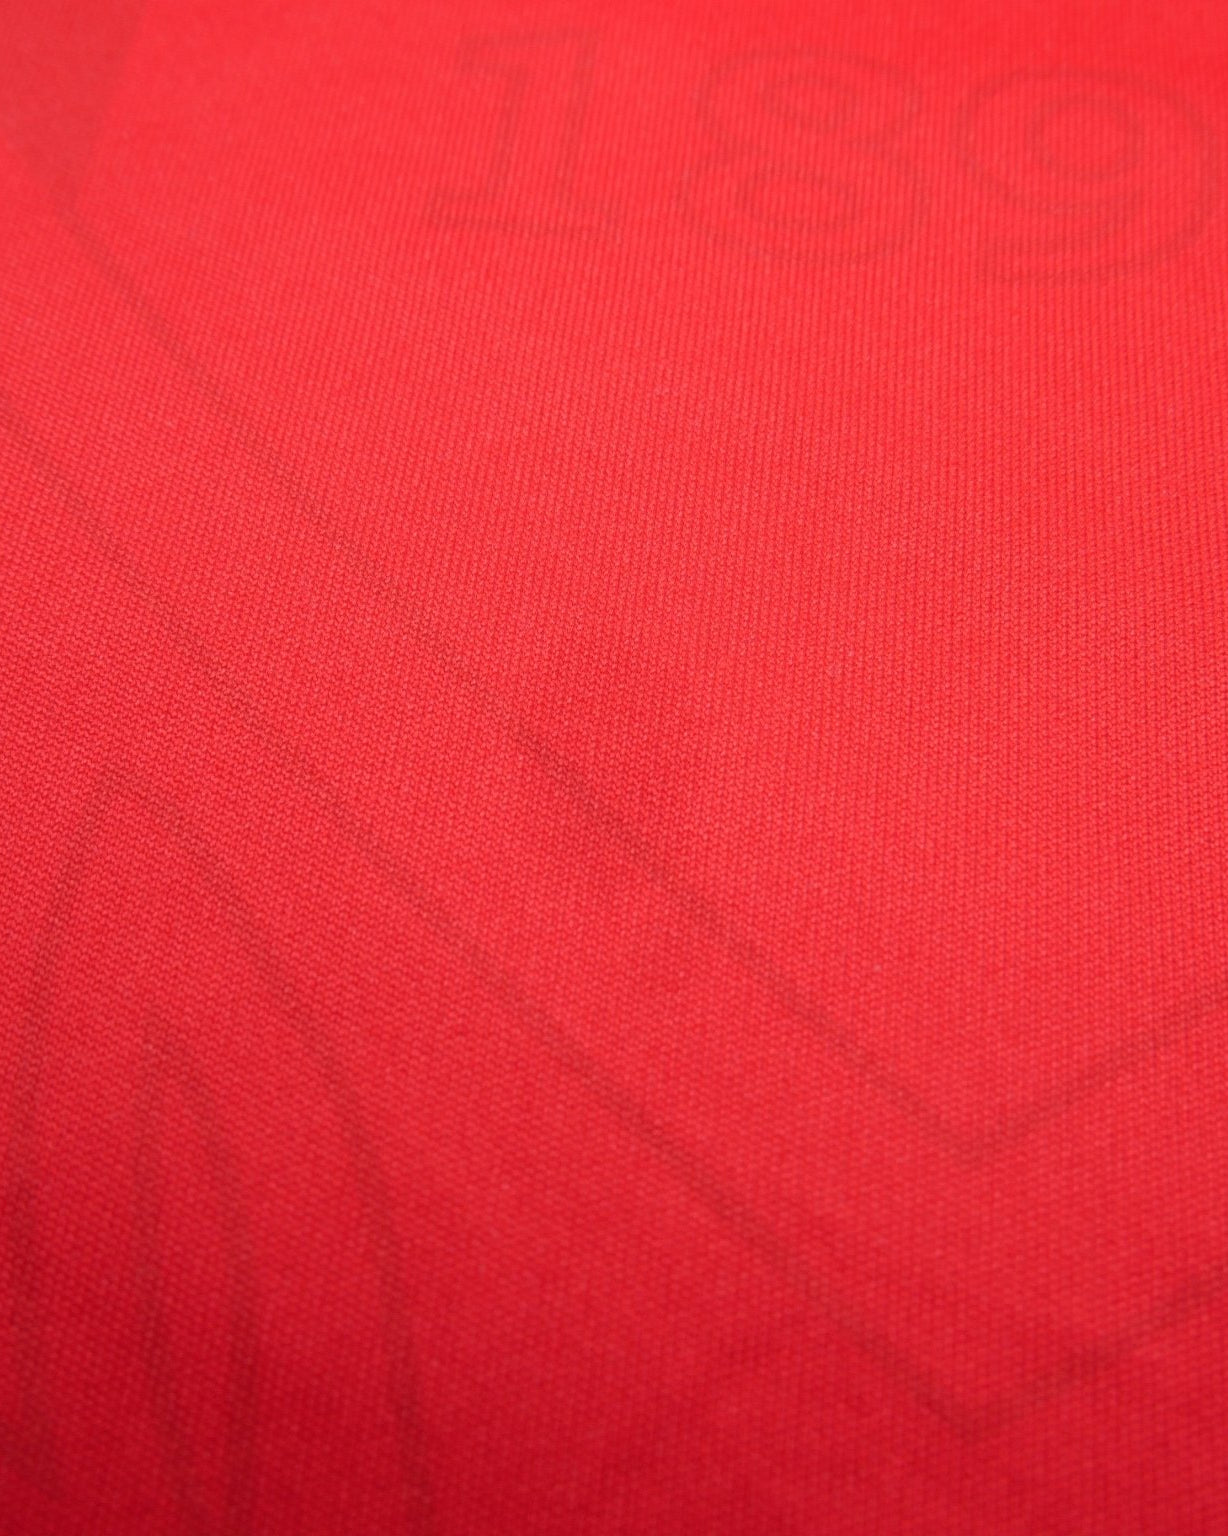 embroidered 'URBSFA KBVB' Trickot Shirt - Peeces